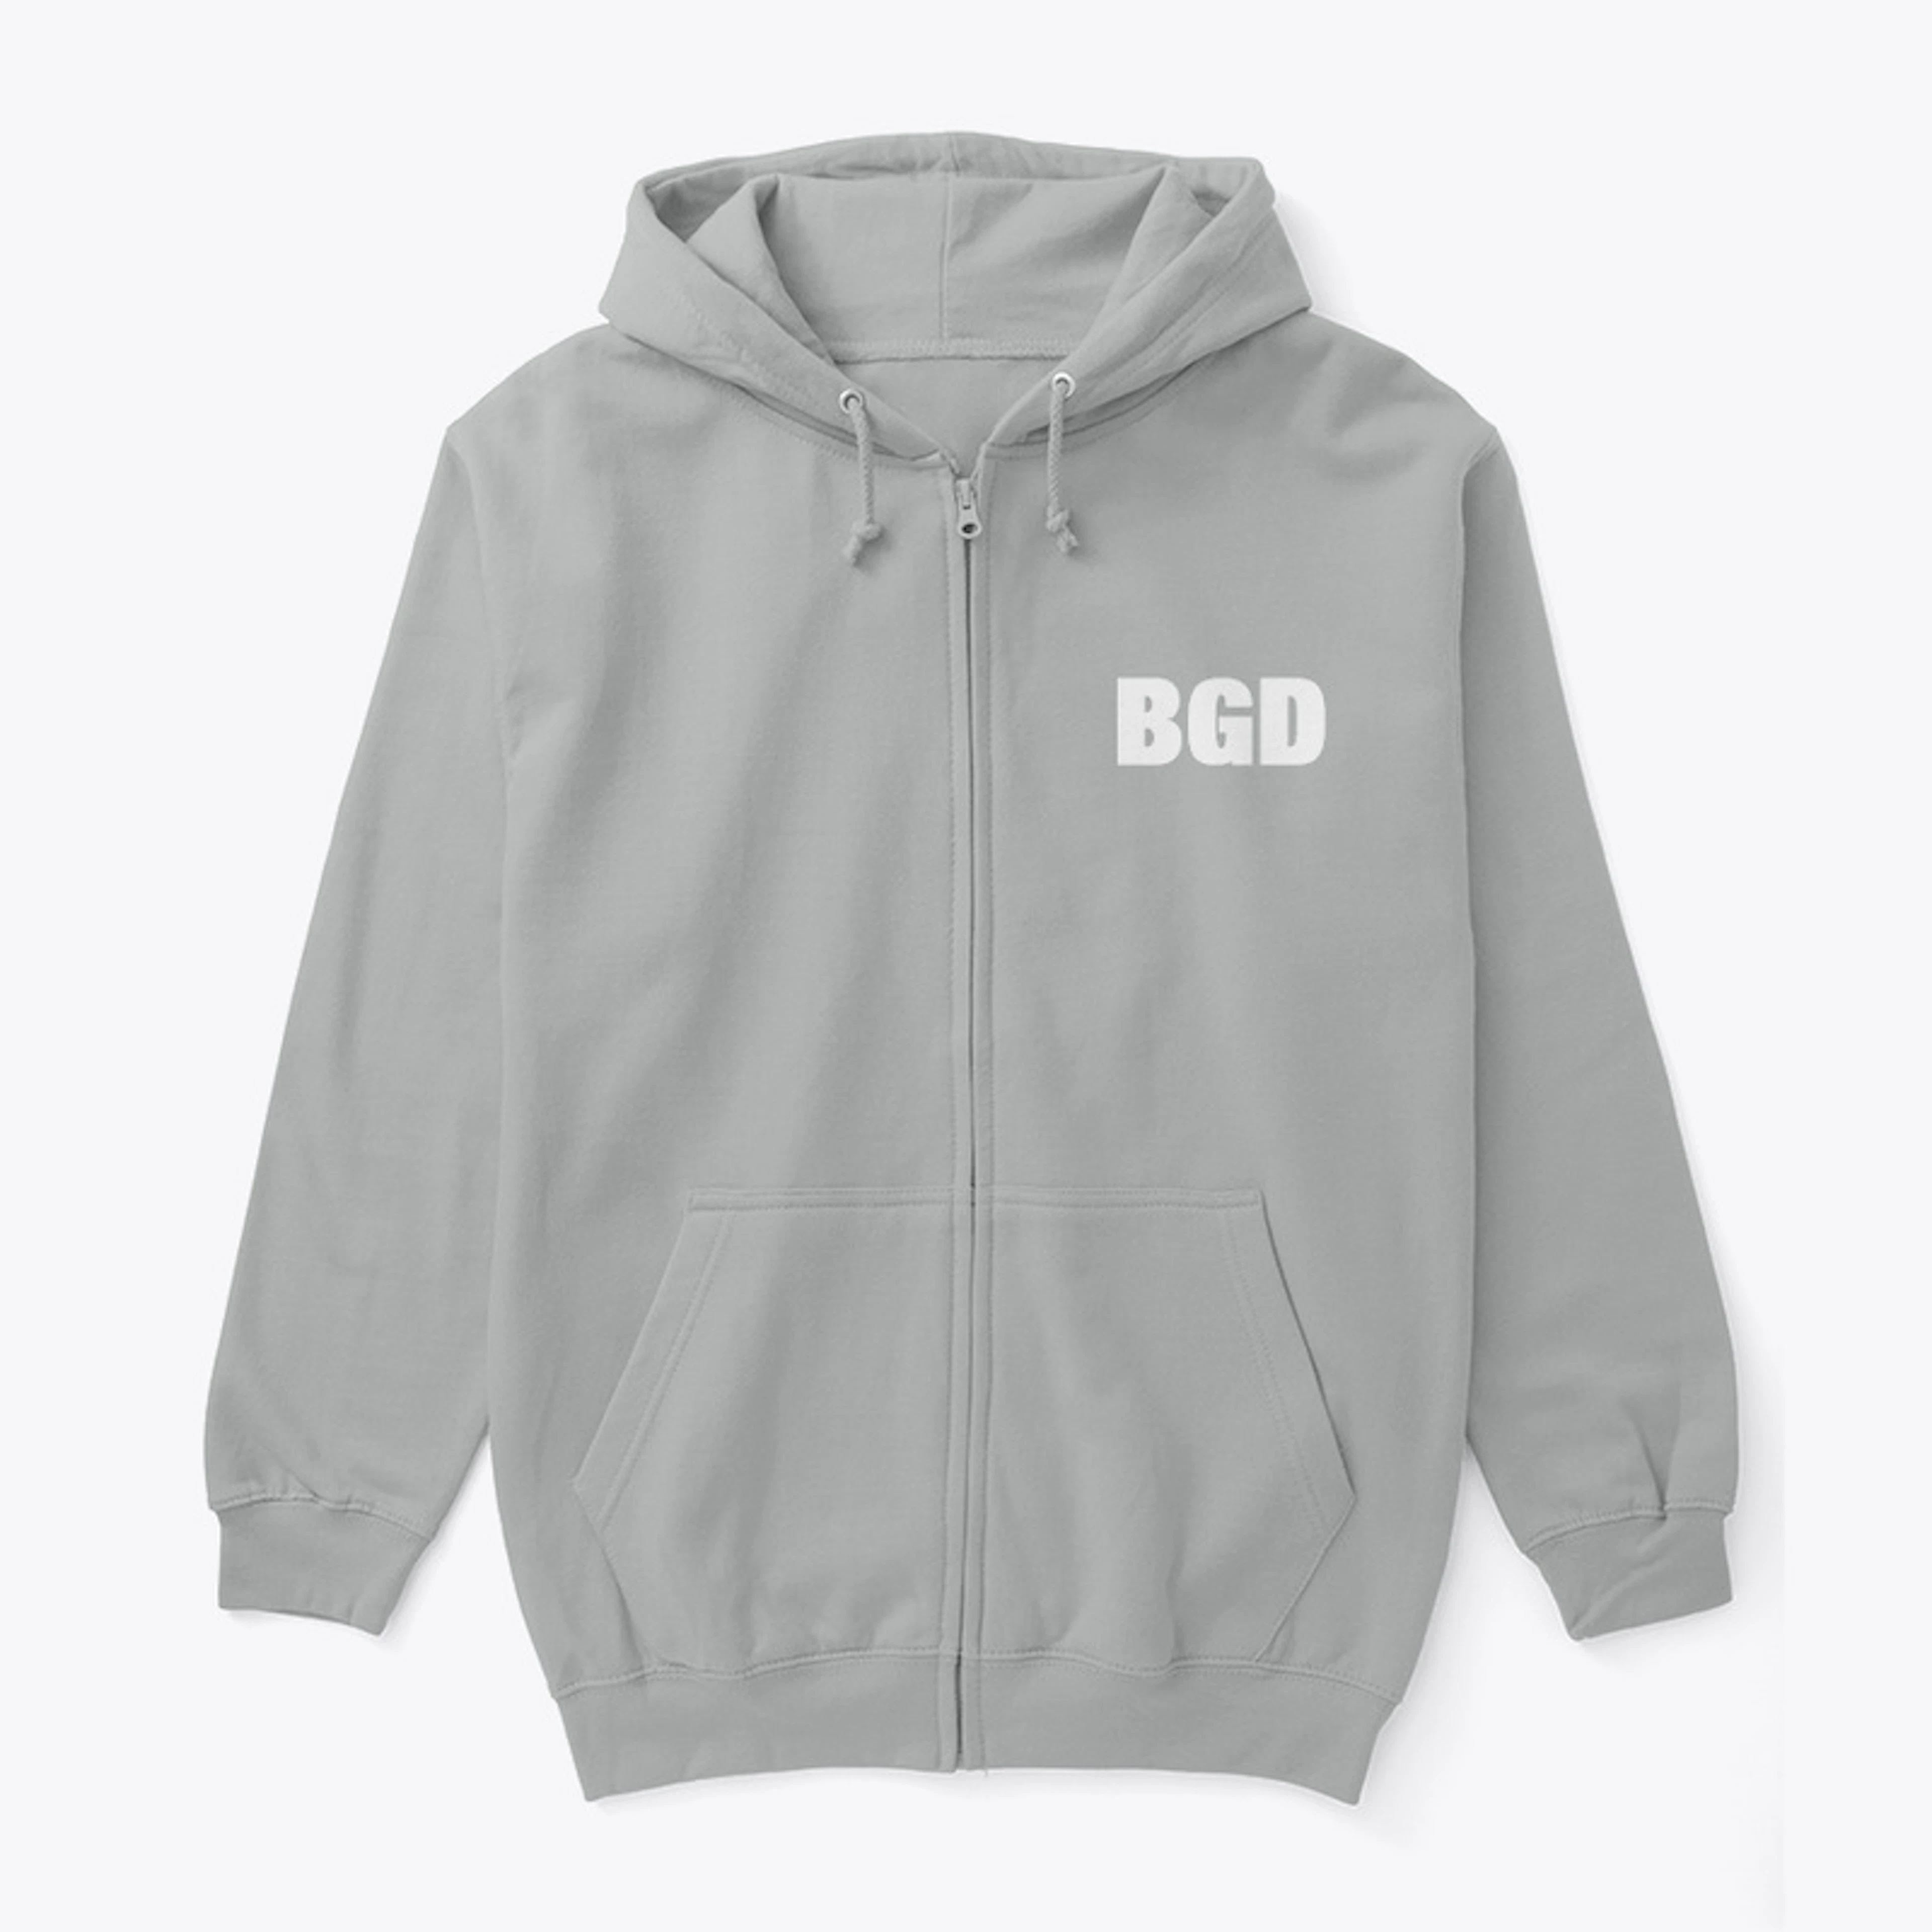 BGD: Active wear